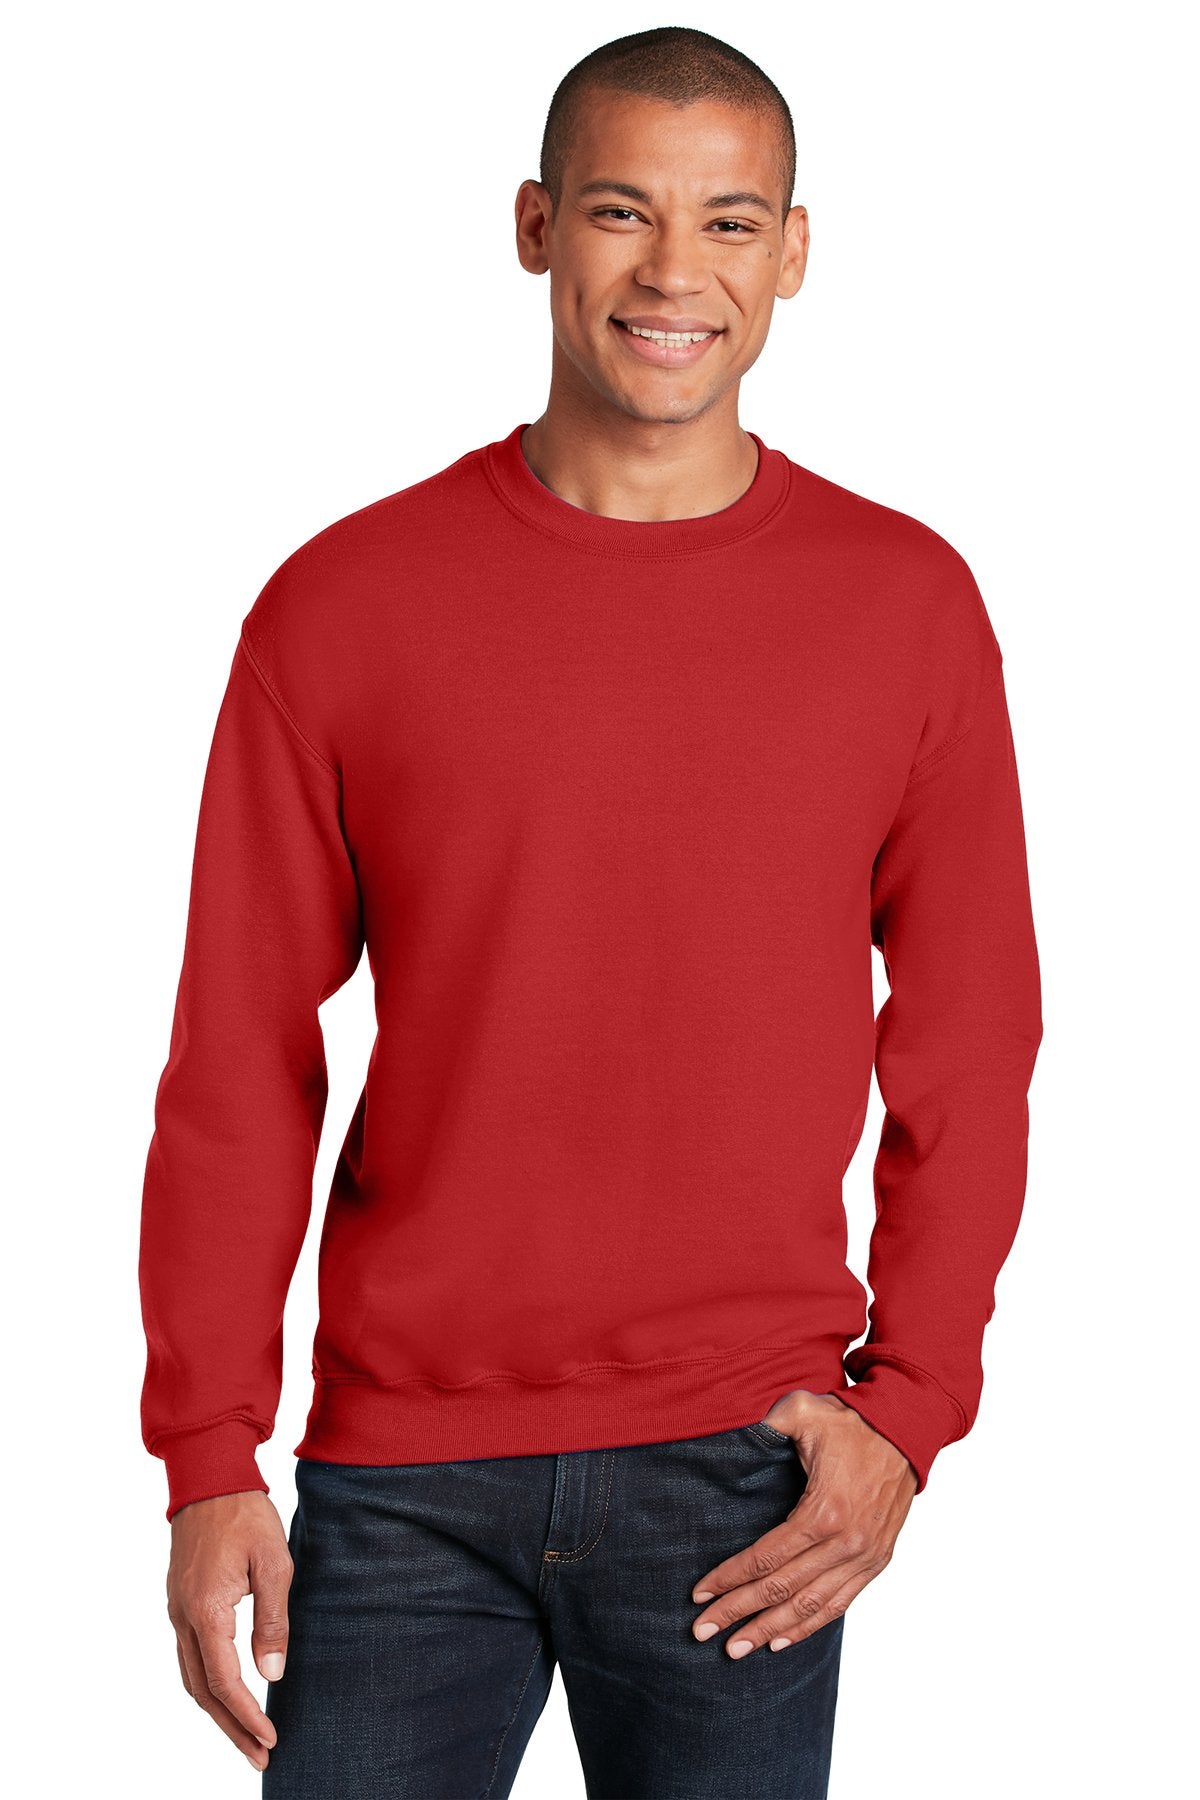 Gildan Red 18000 custom logo sweatshirts embroidered